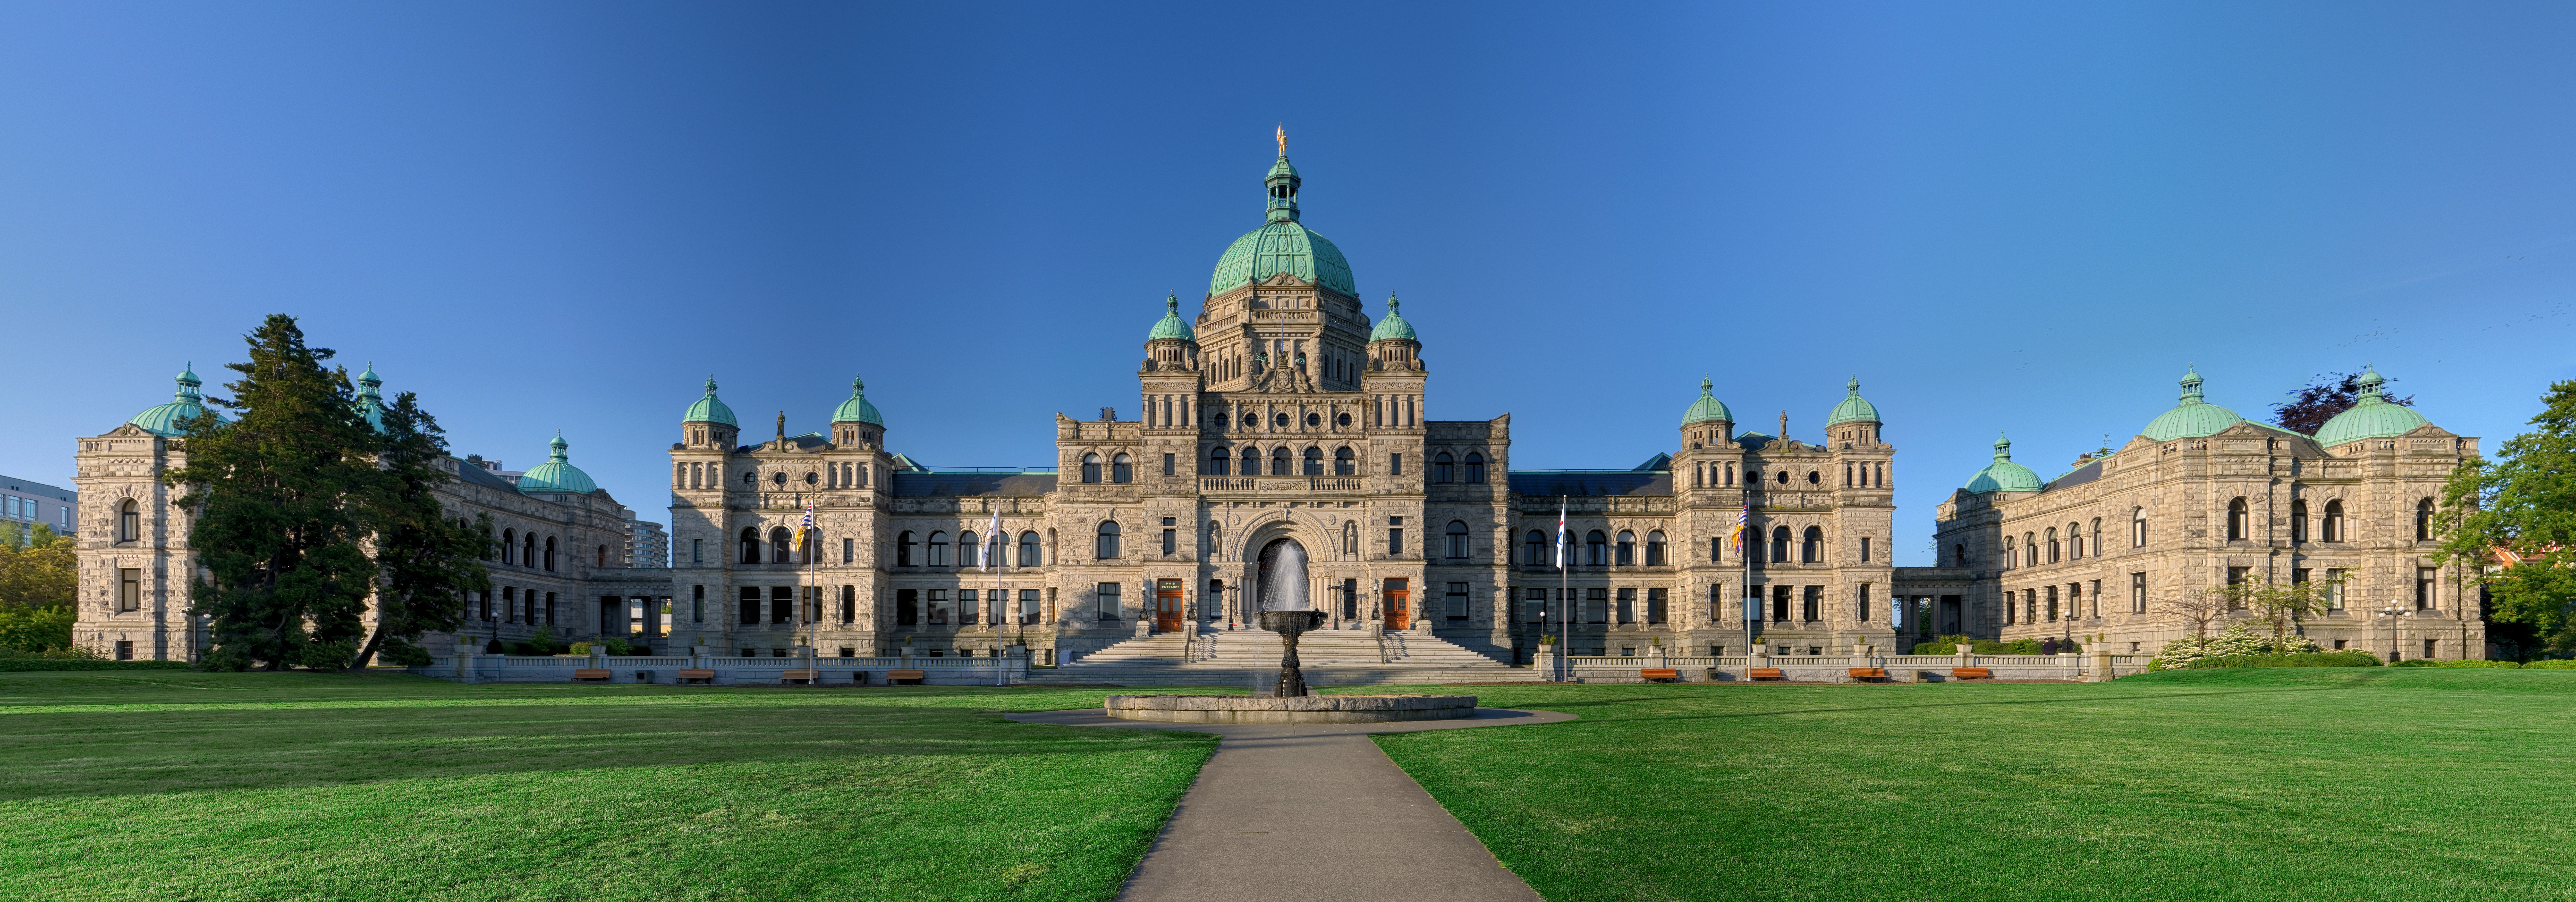 File:British Columbia Parliament Buildings - Pano - HDR.jpg - Wikipedia